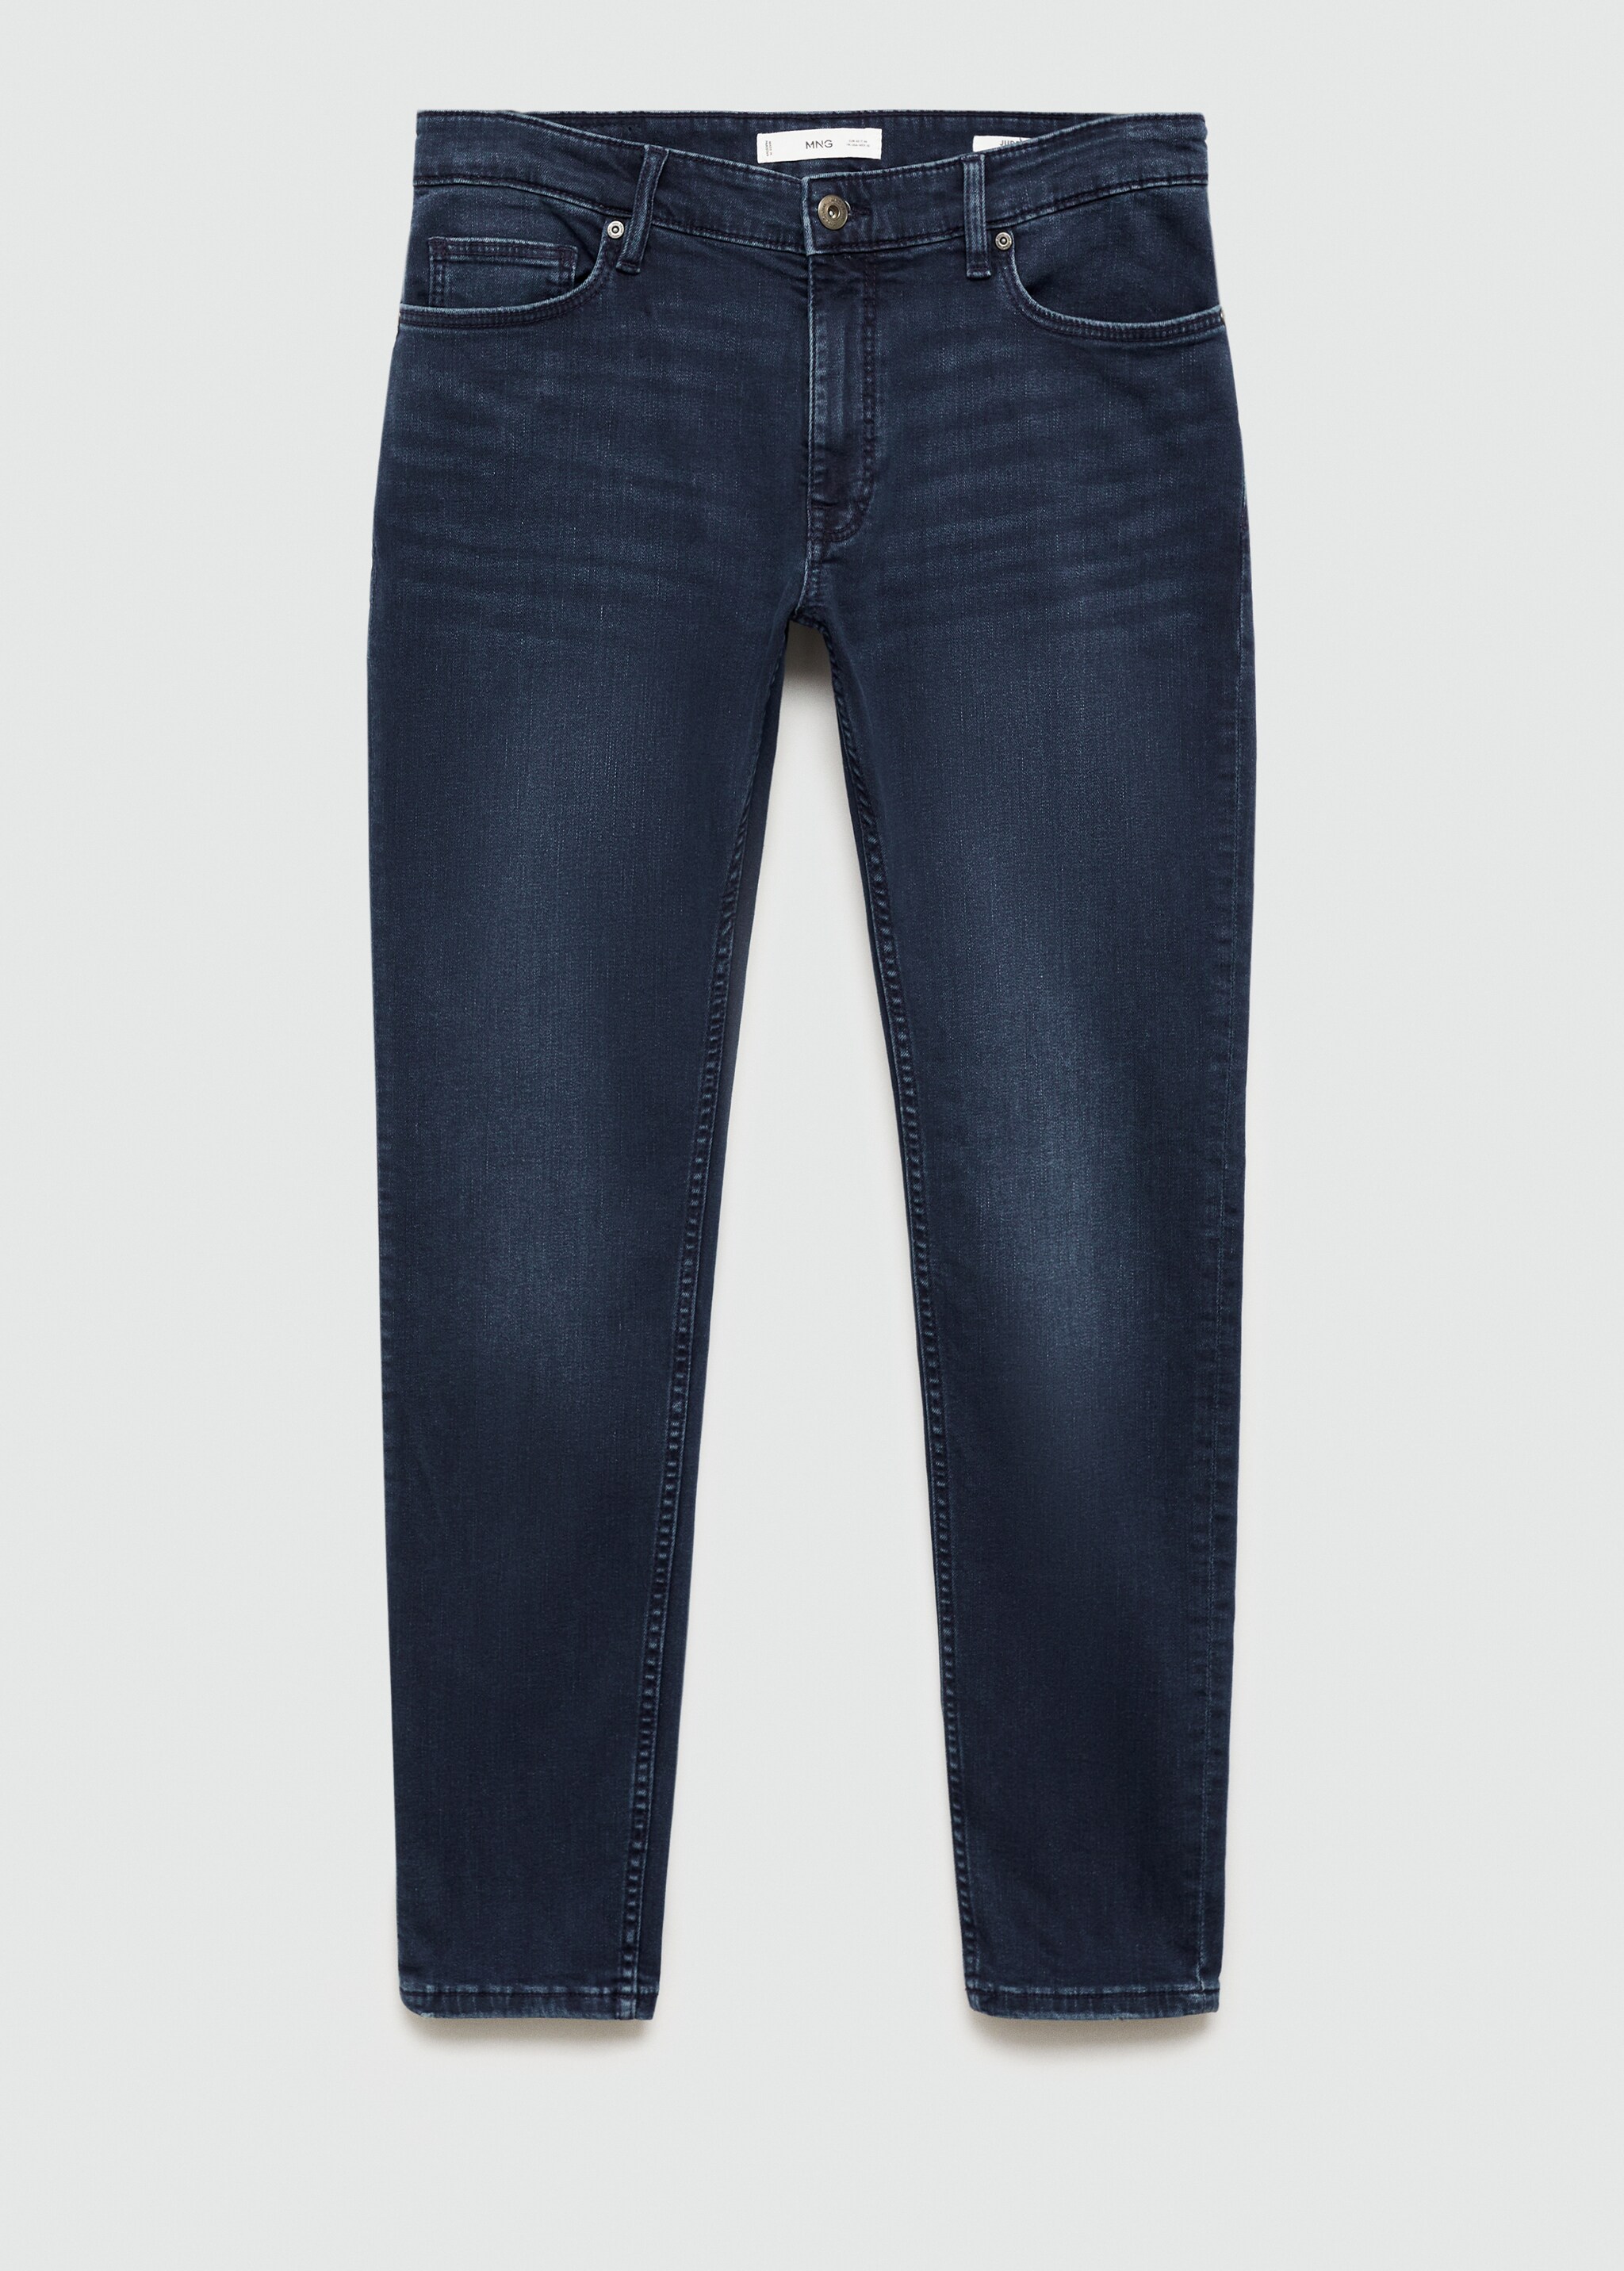 Jeans Jude skinny fit - Artículo sin modelo